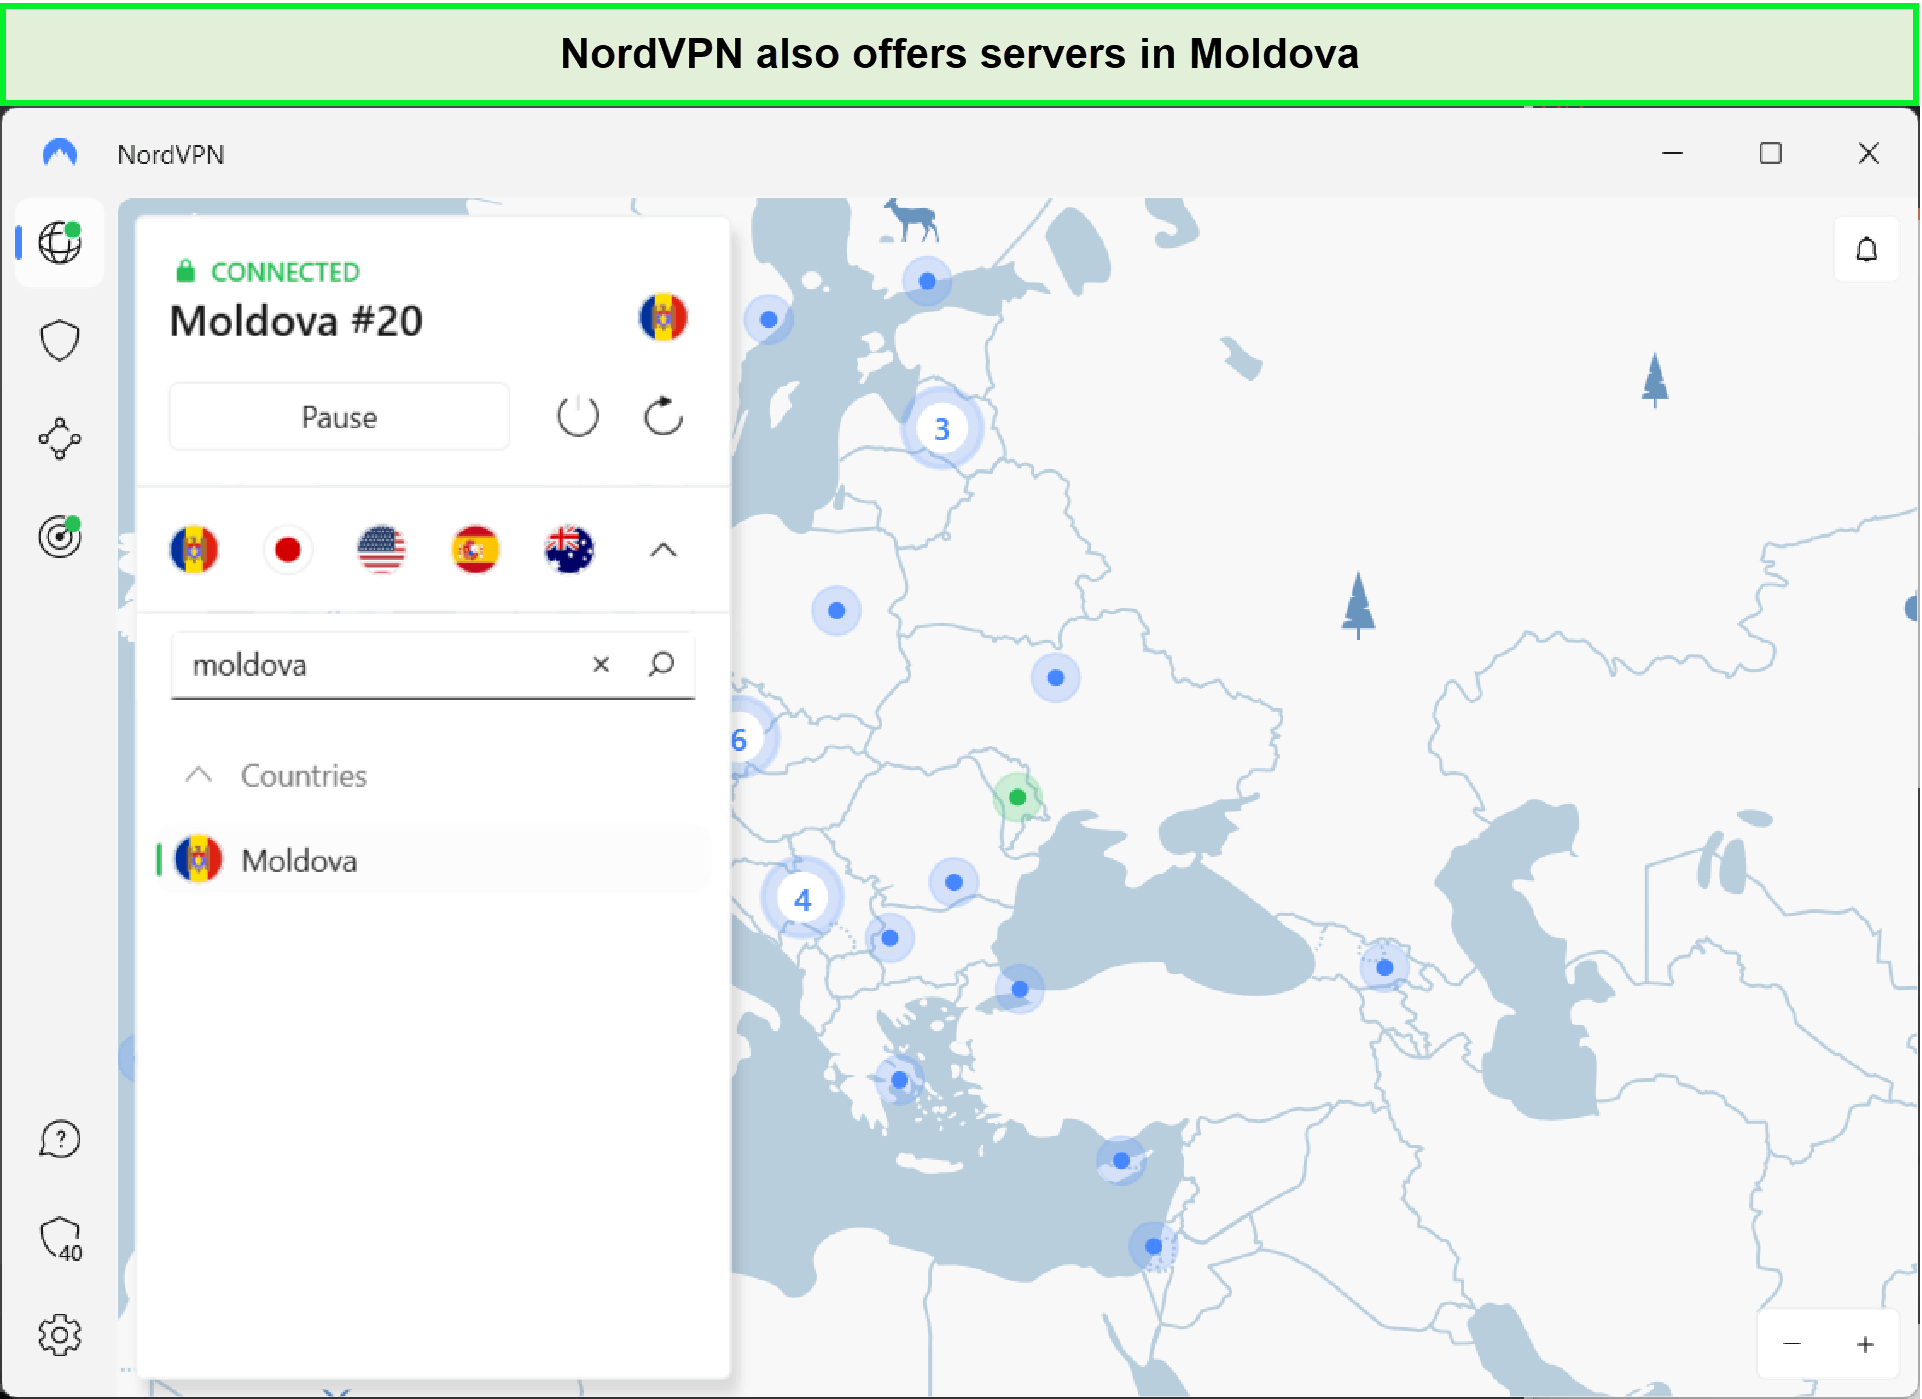 nordvpn-moldova-servers